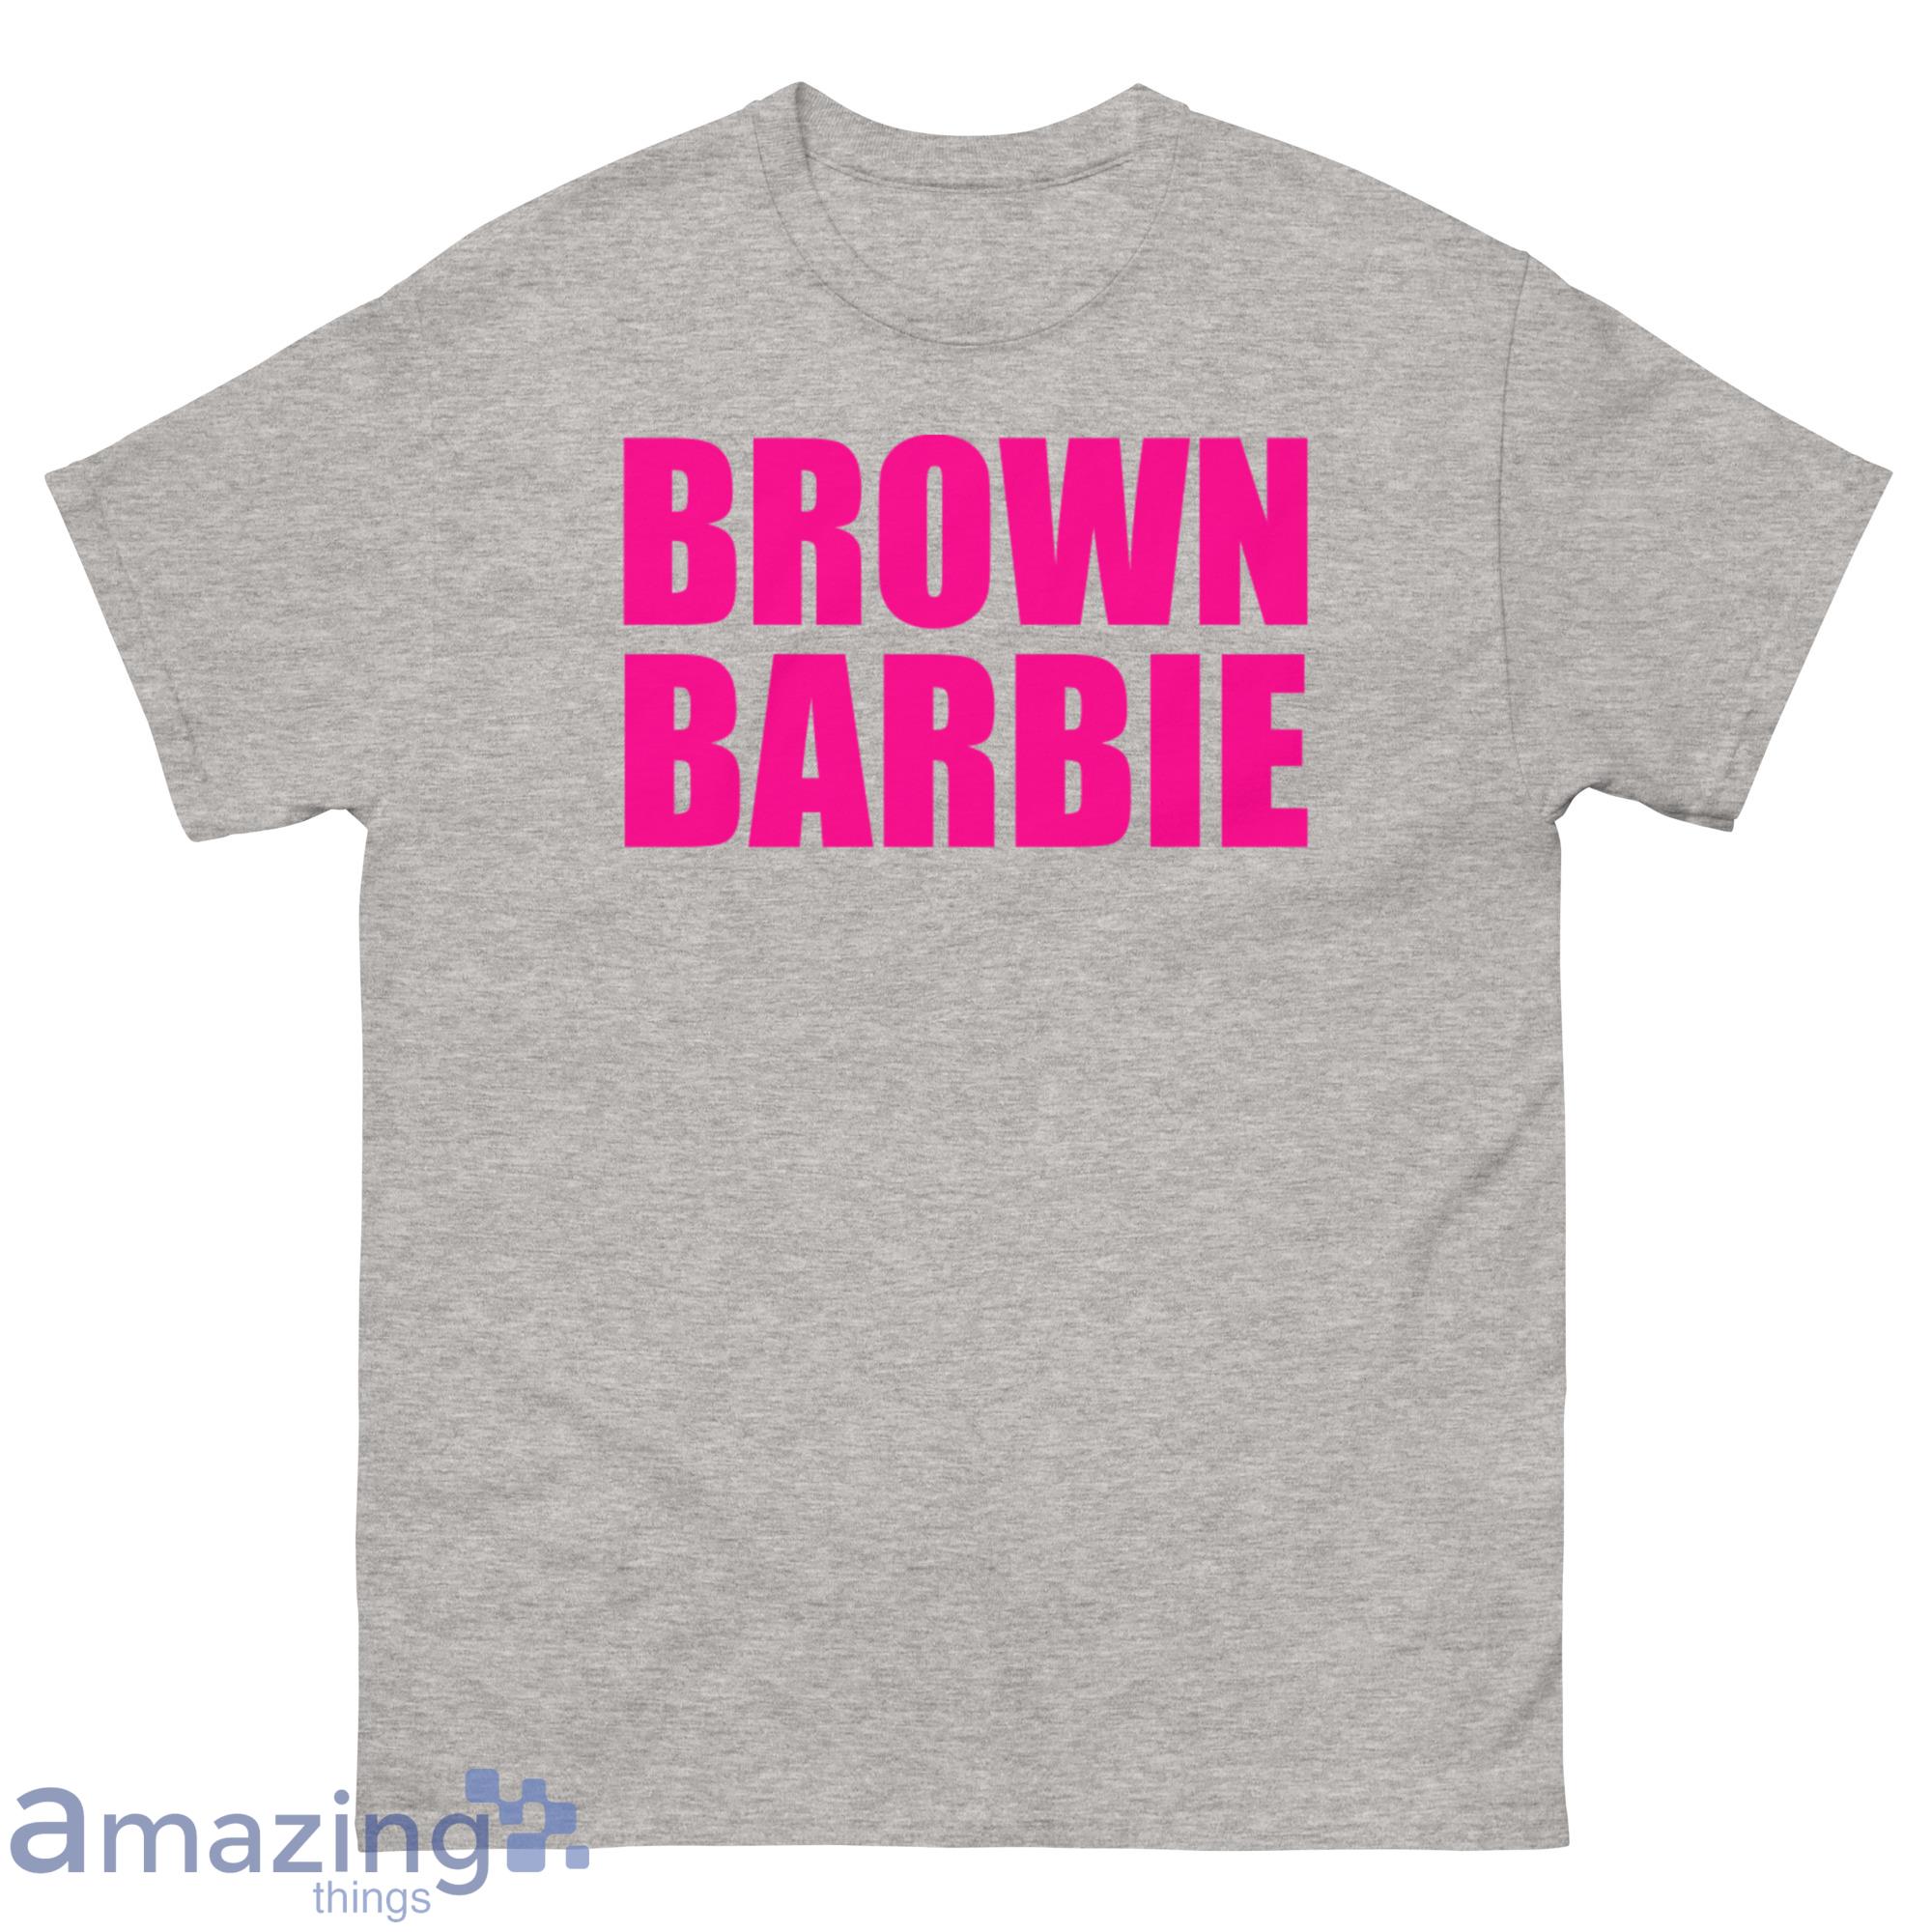 Barbie Brune Shirt - G500 Men’s Classic T-Shirt